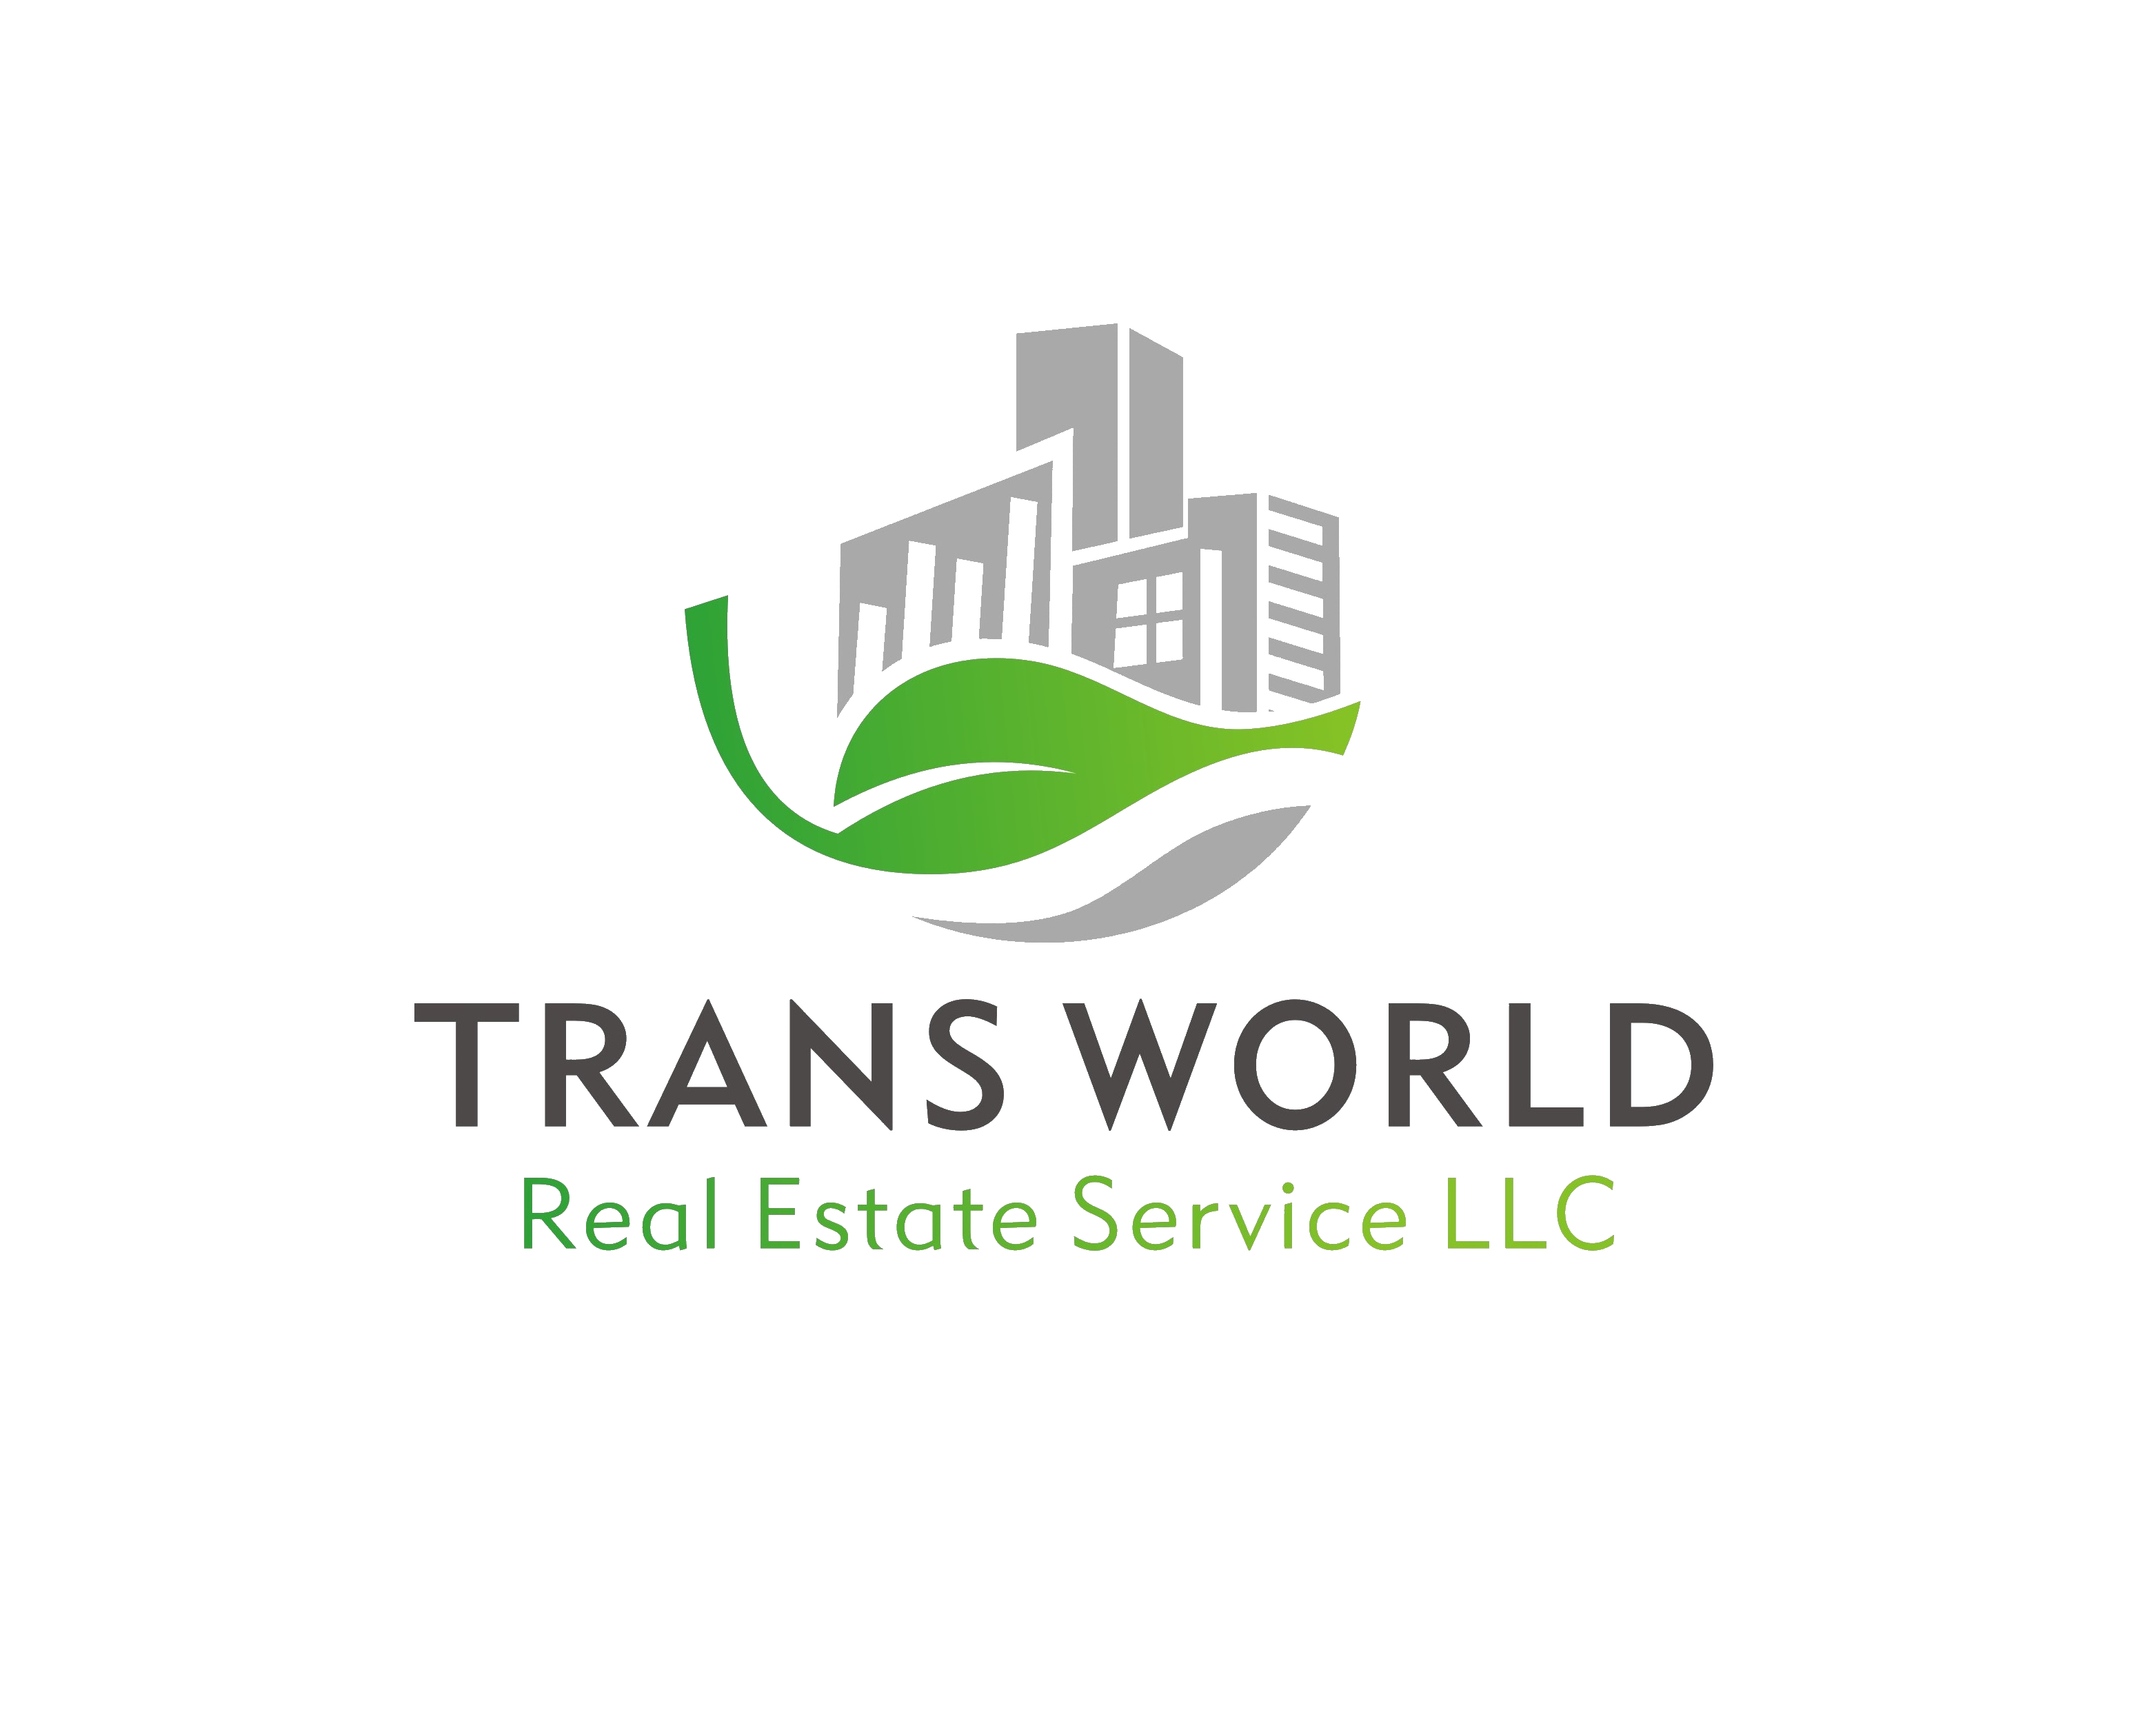 Trans World Real Estate Service LLC